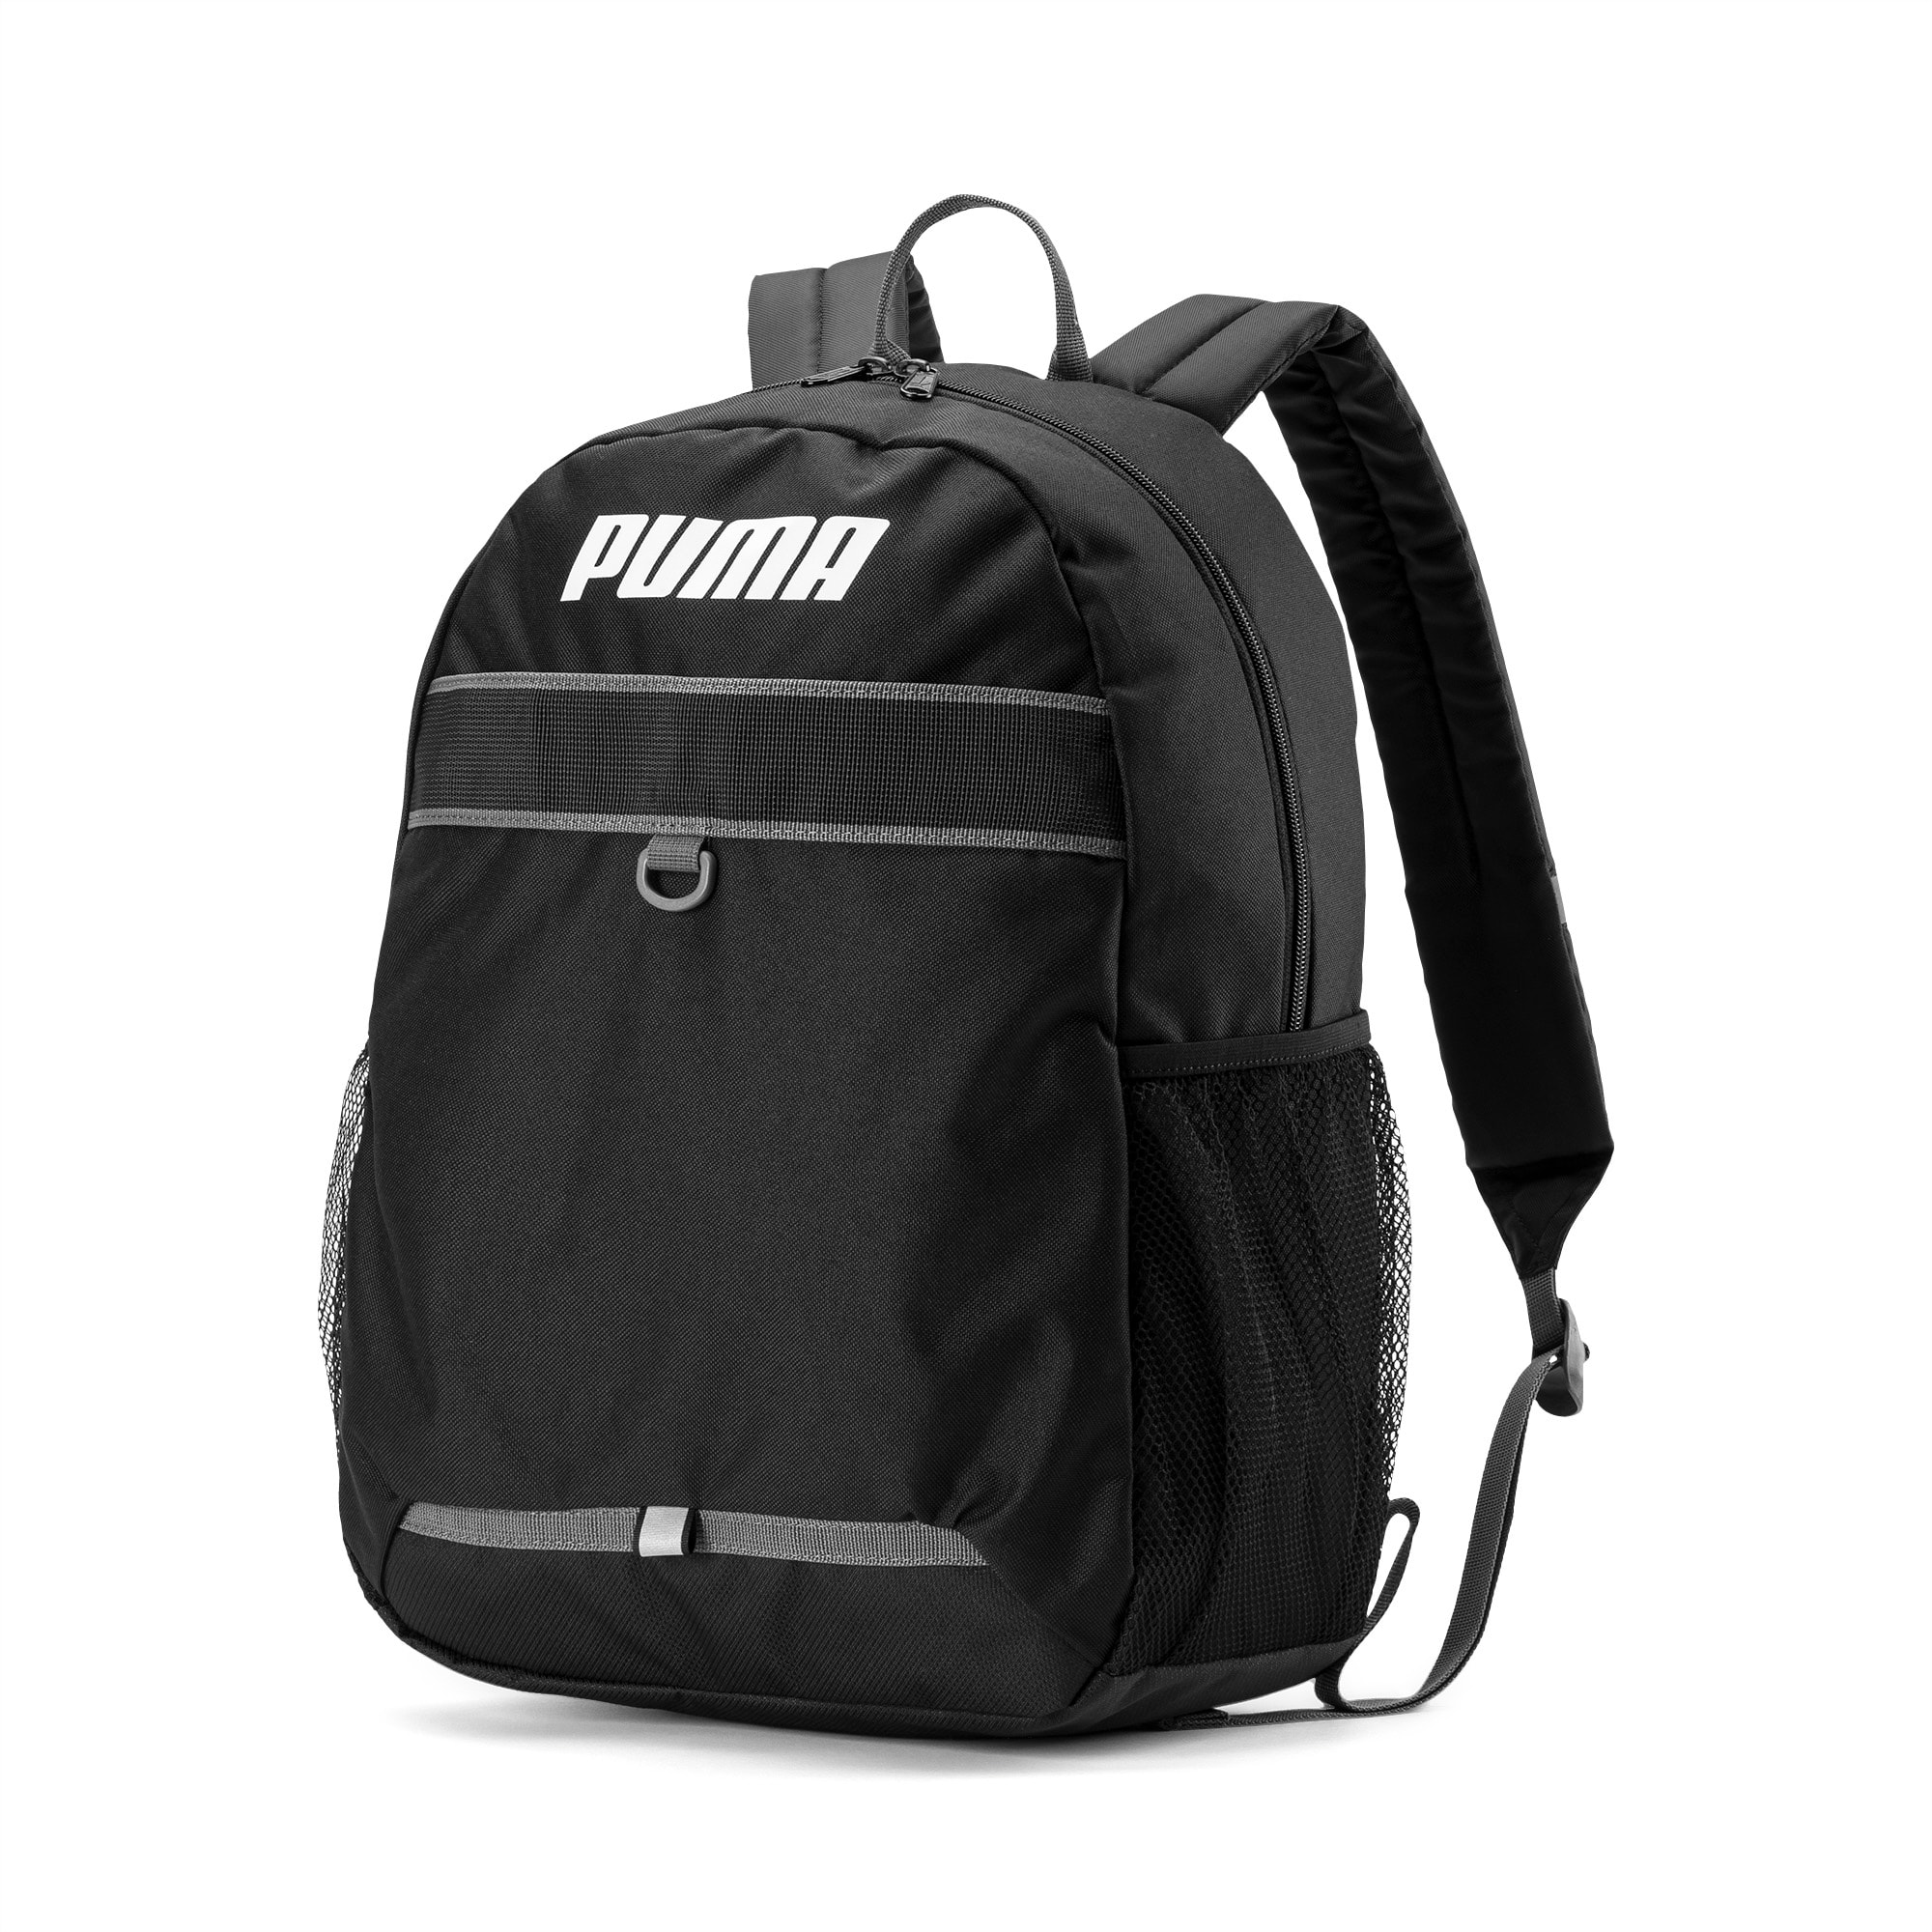 PUMA Plus Backpack | PUMA US